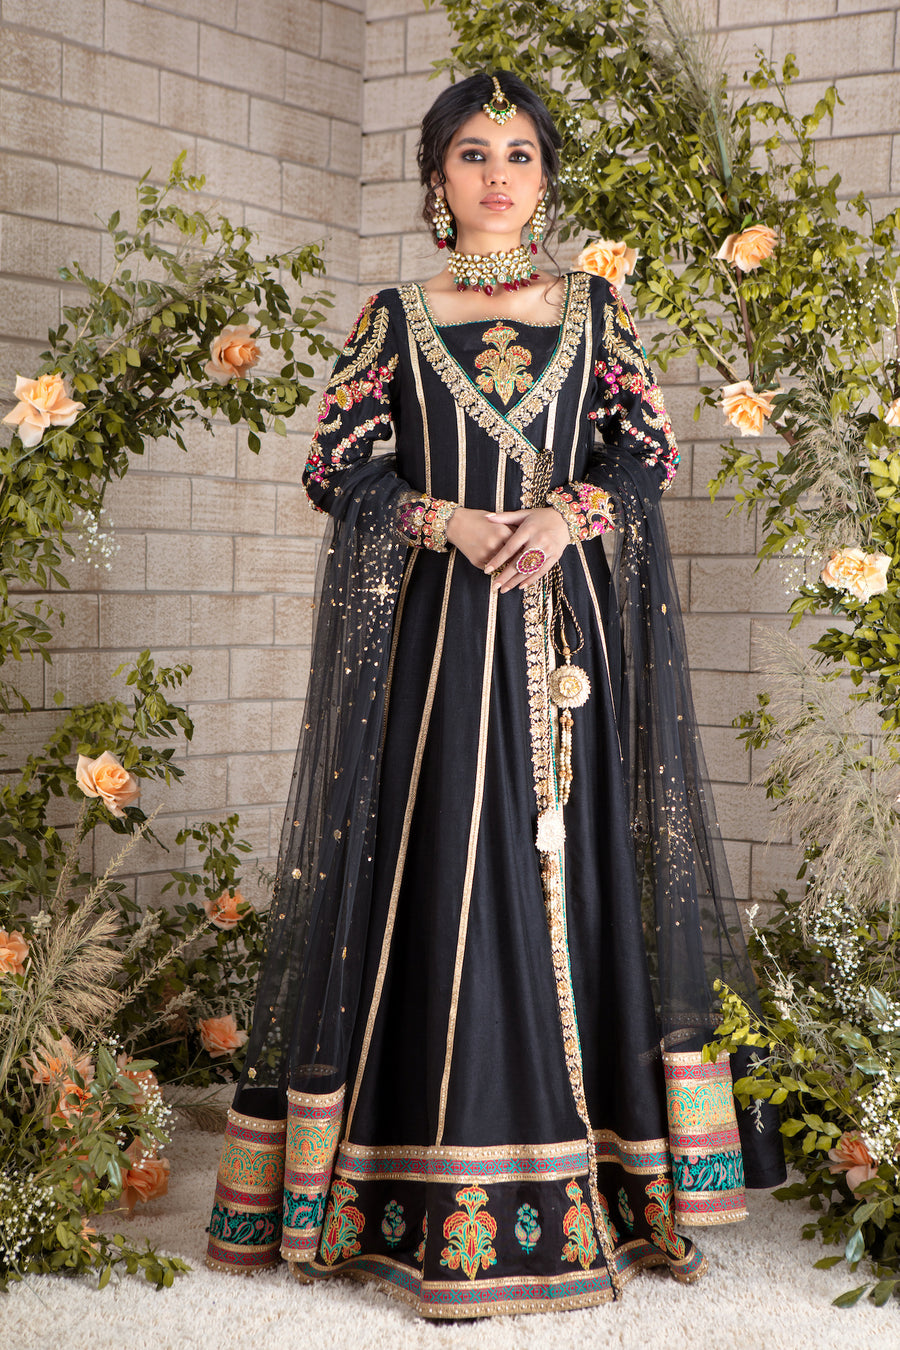 Manaal | Pakistani Designer Outfit | Sarosh Salman